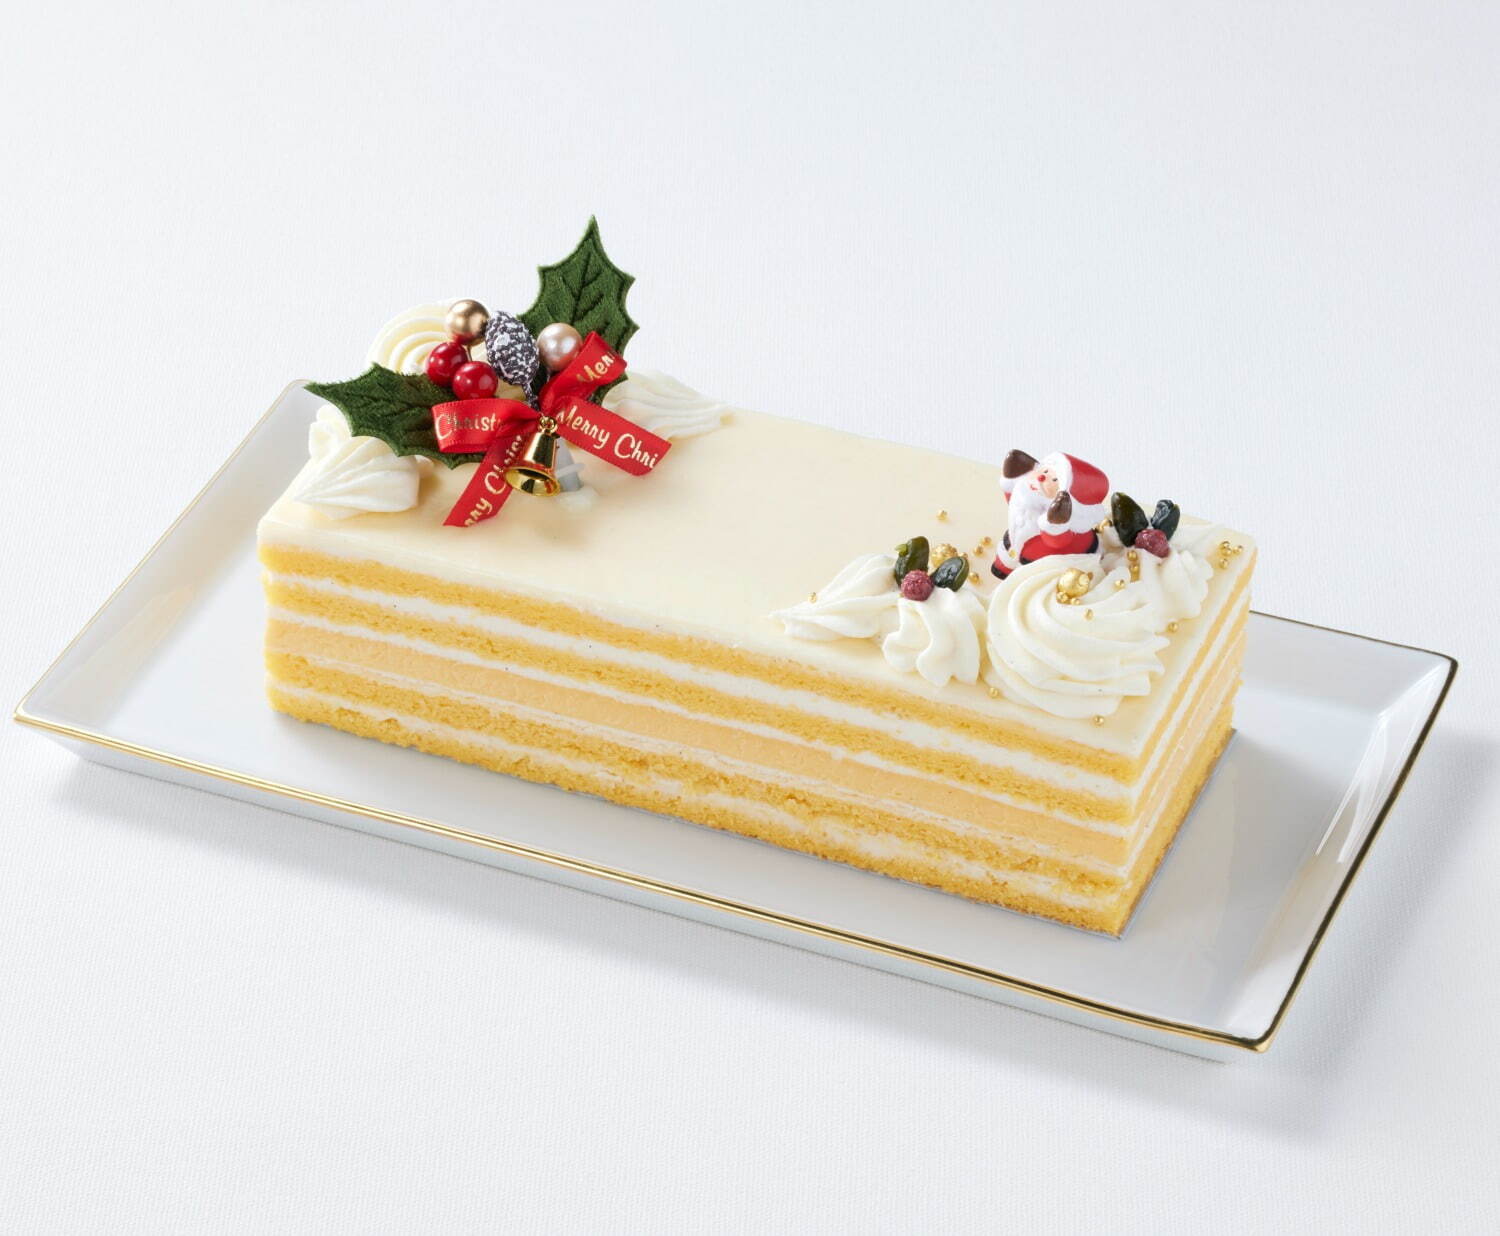 〈NARISAWA〉NARISAWA 特製バニラ生ケーキ“White Christmas” 10,800円 ※松屋限定、限定70台